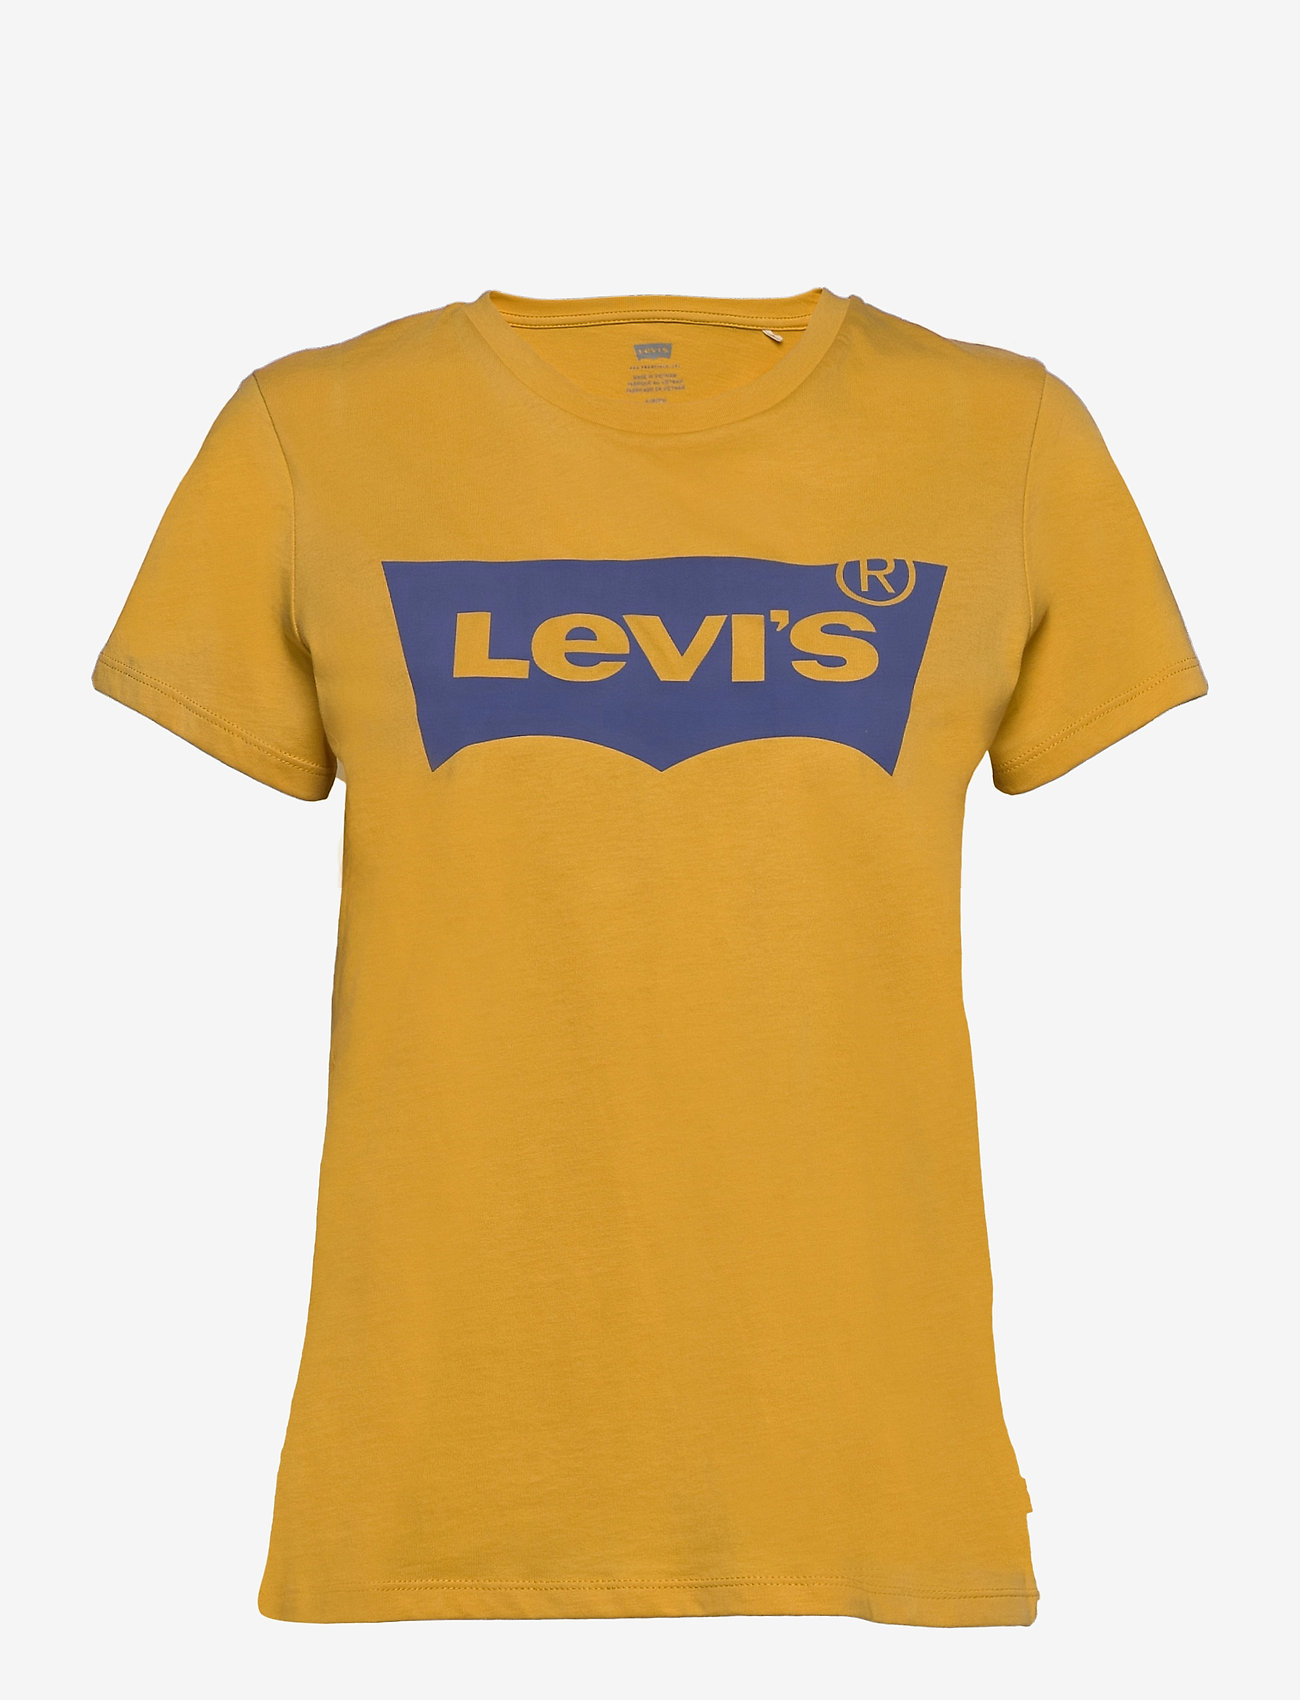 t shirt levis gold